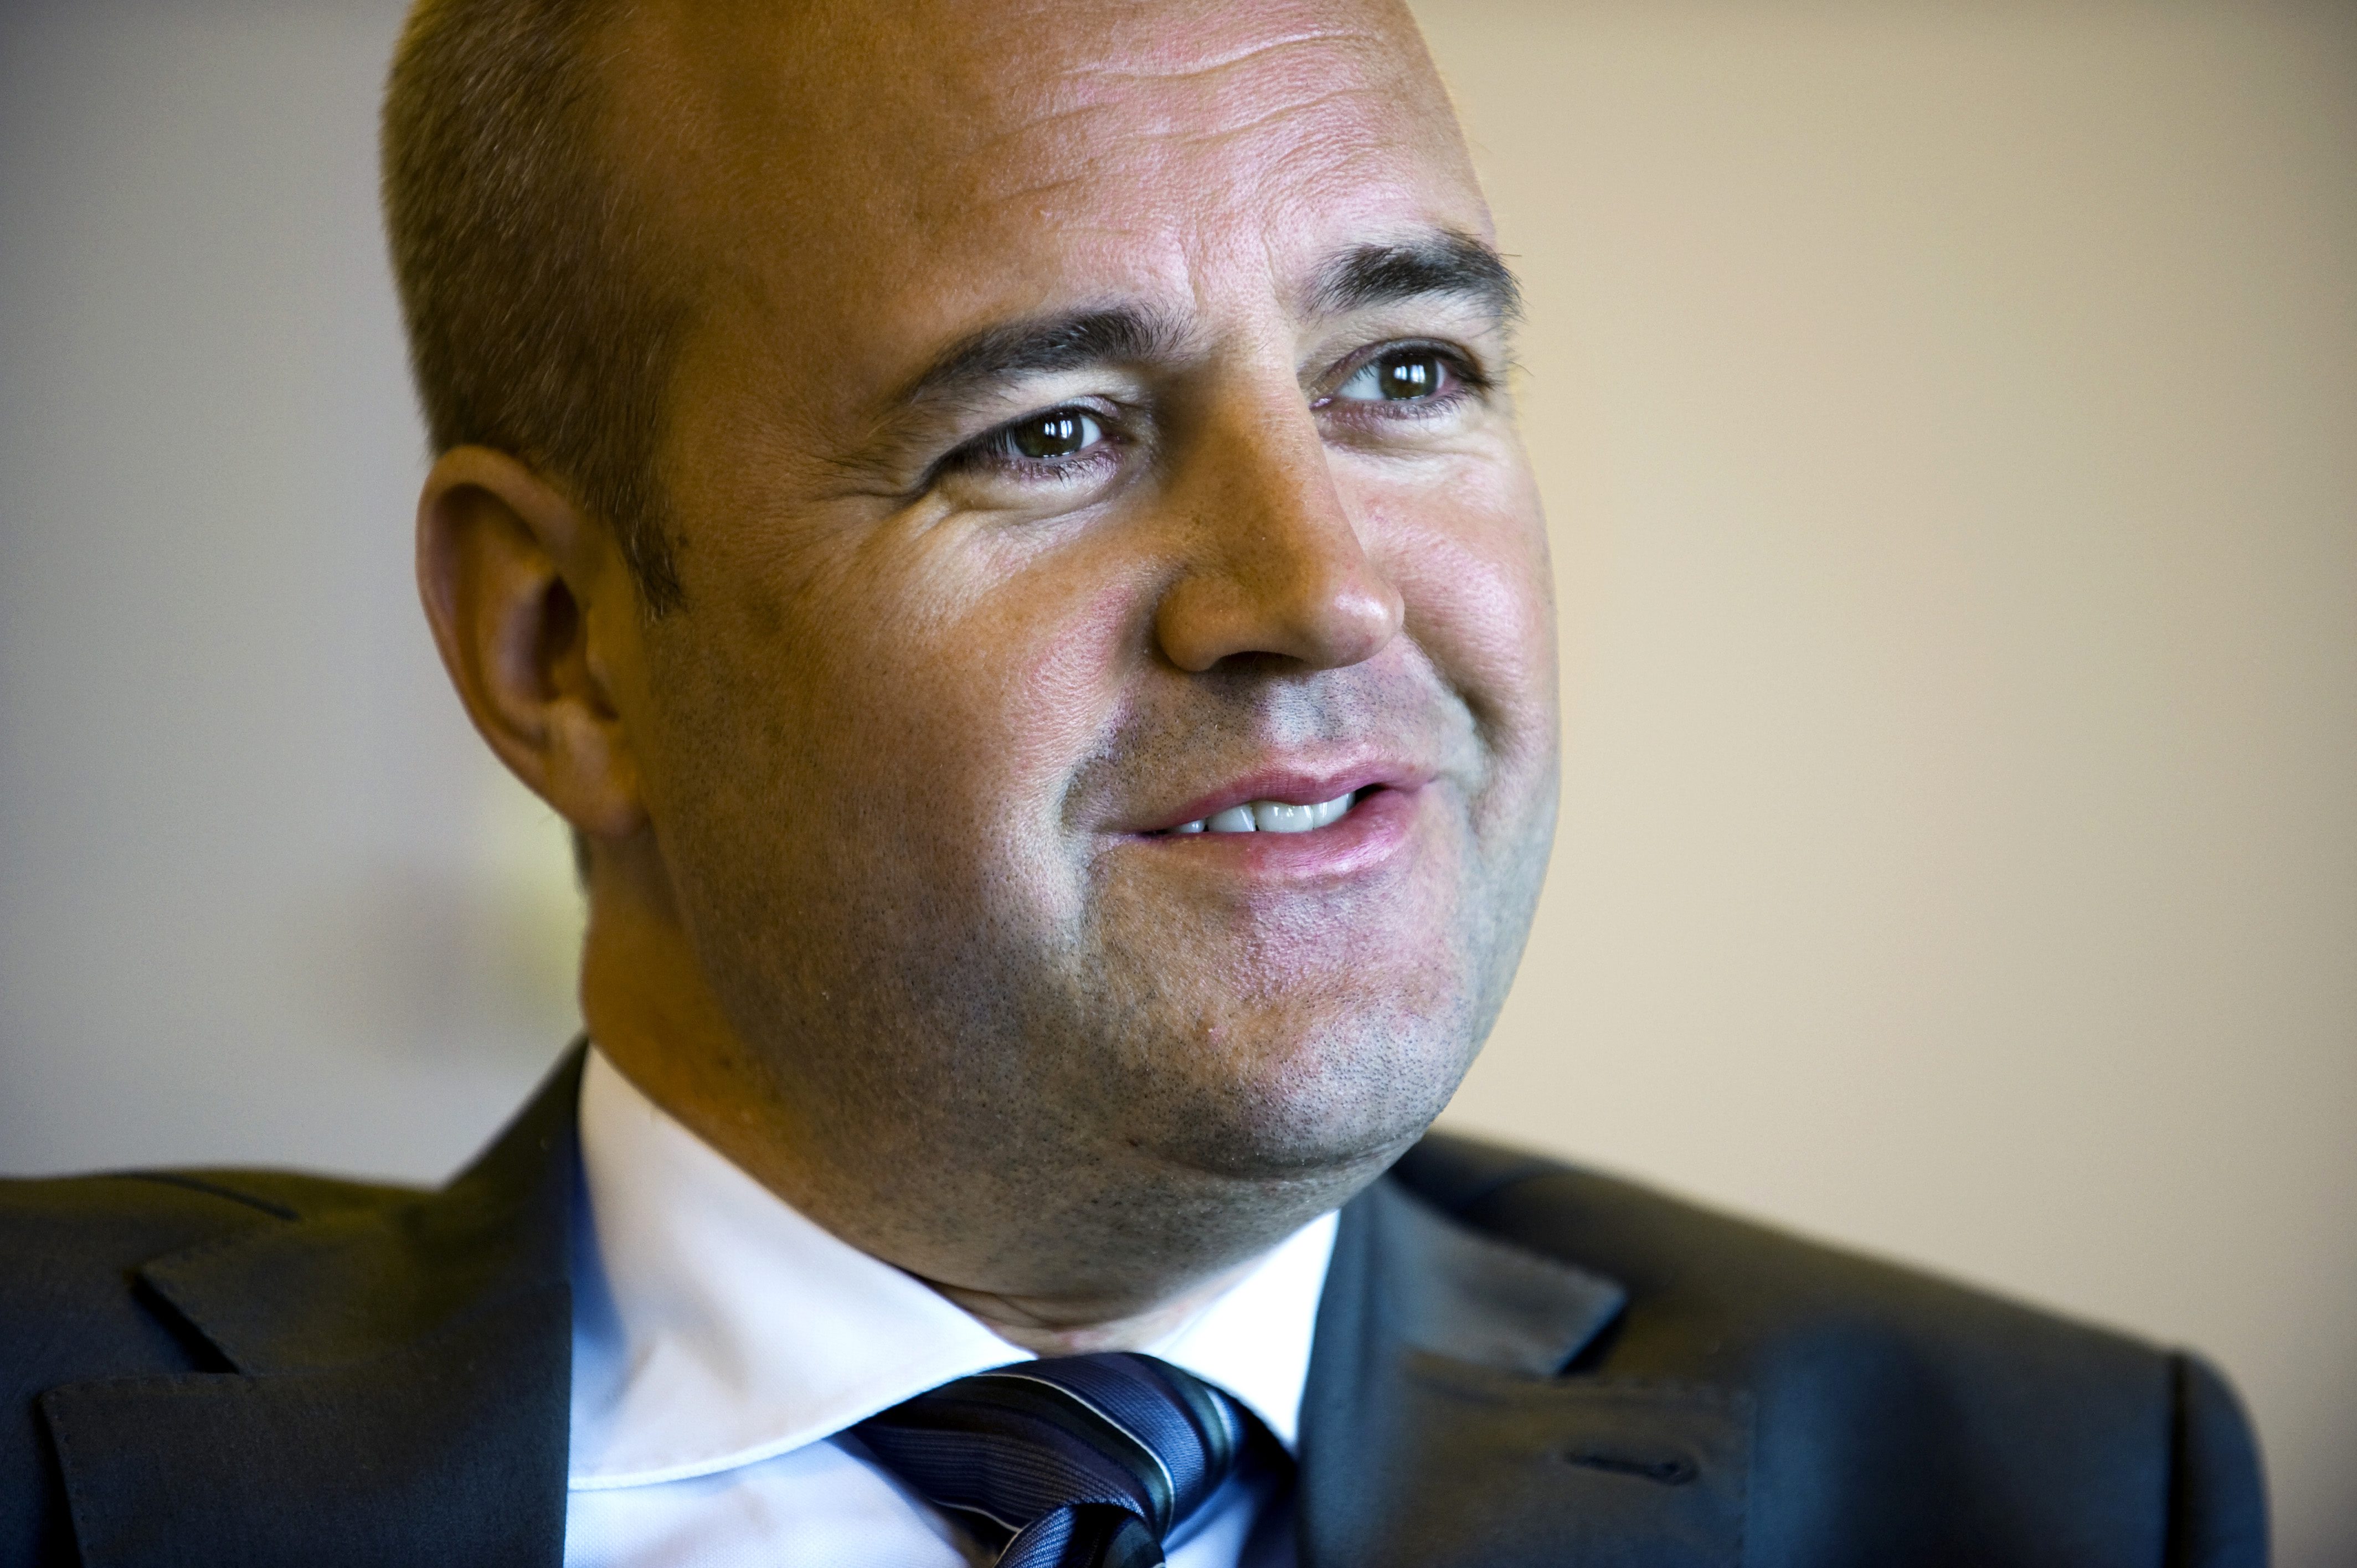 turkiet, Fredrik Reinfeldt, Antalya, Semester, Säpo, Filippa Reinfeldt, Säkerhetspolisen, Ving